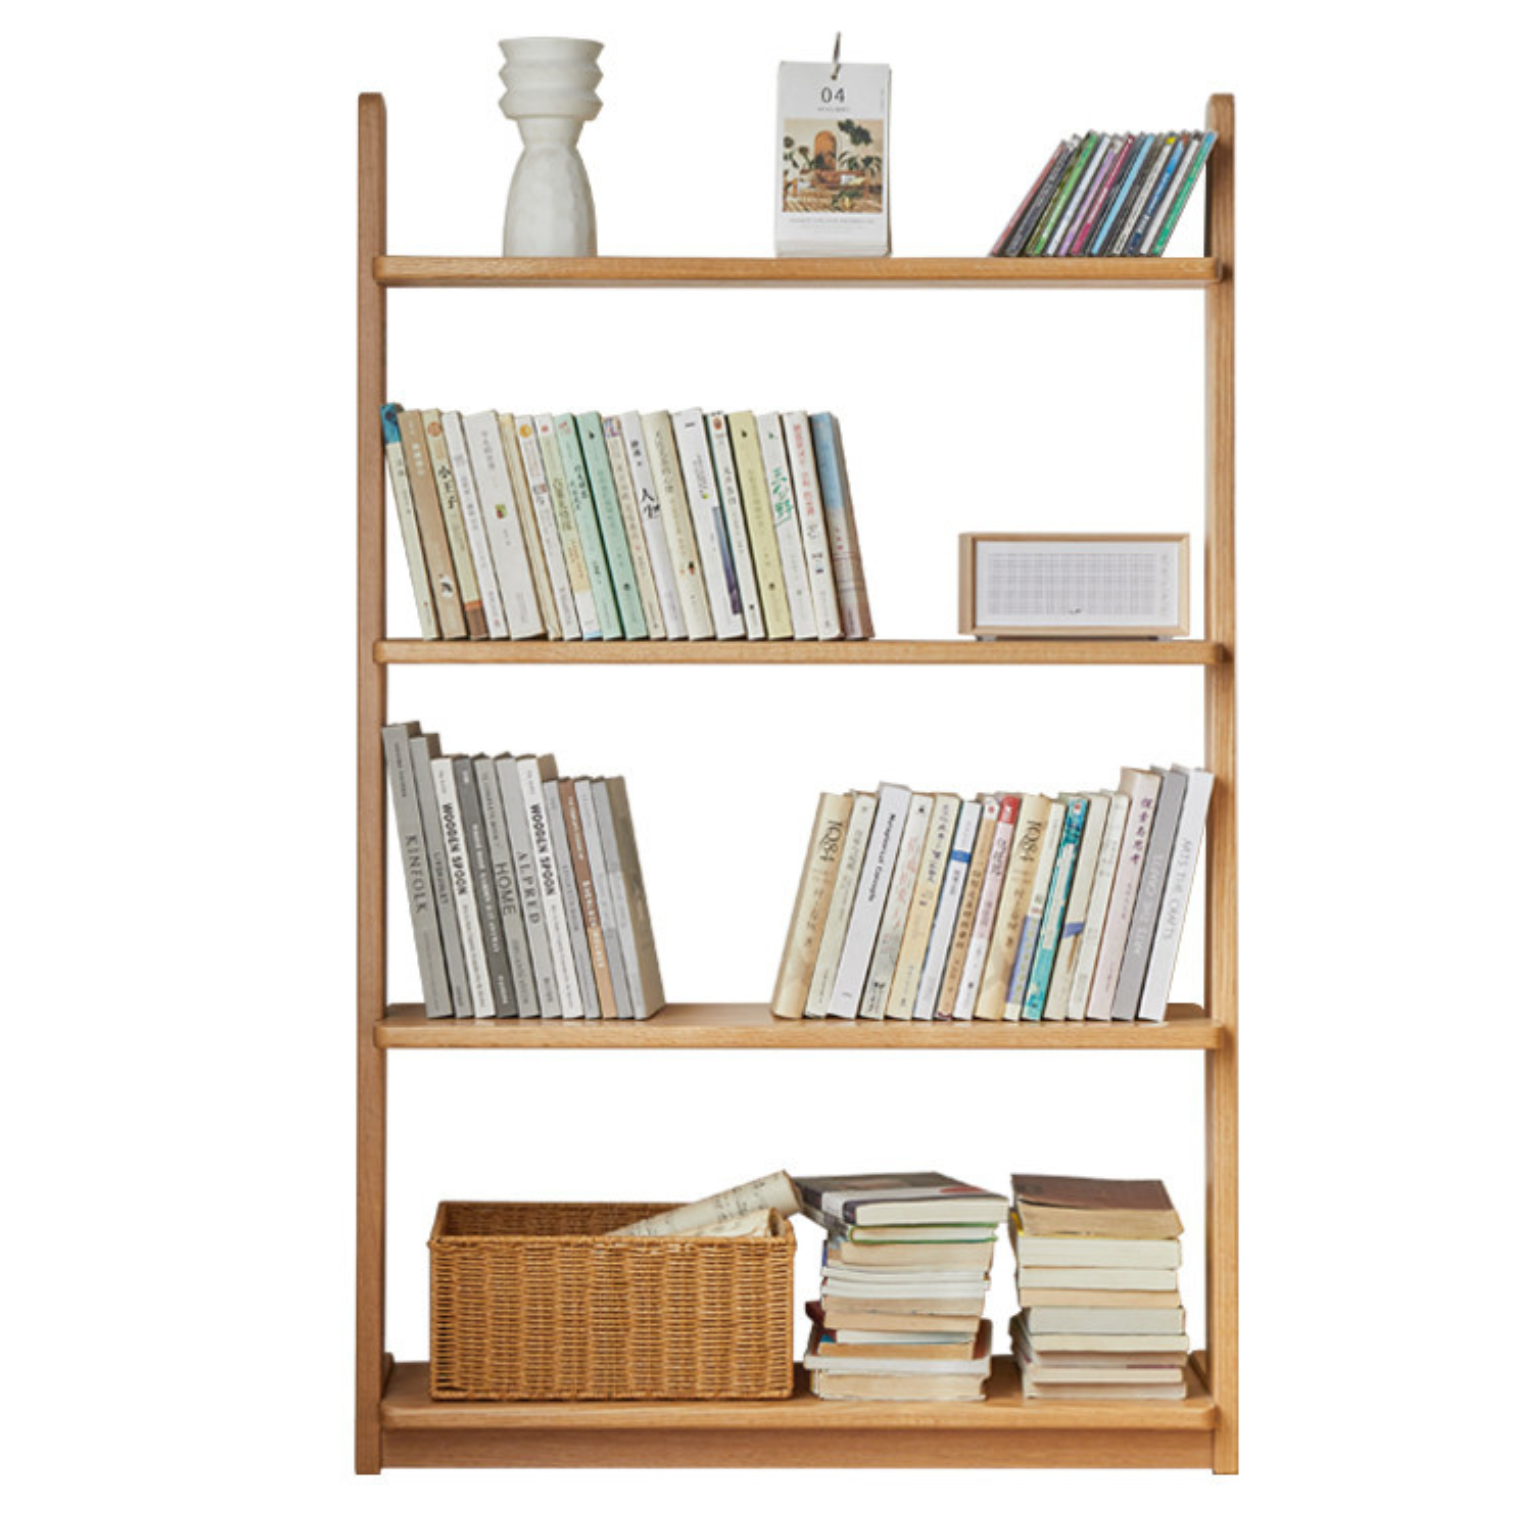 Oak solid wood bookshelf racks -